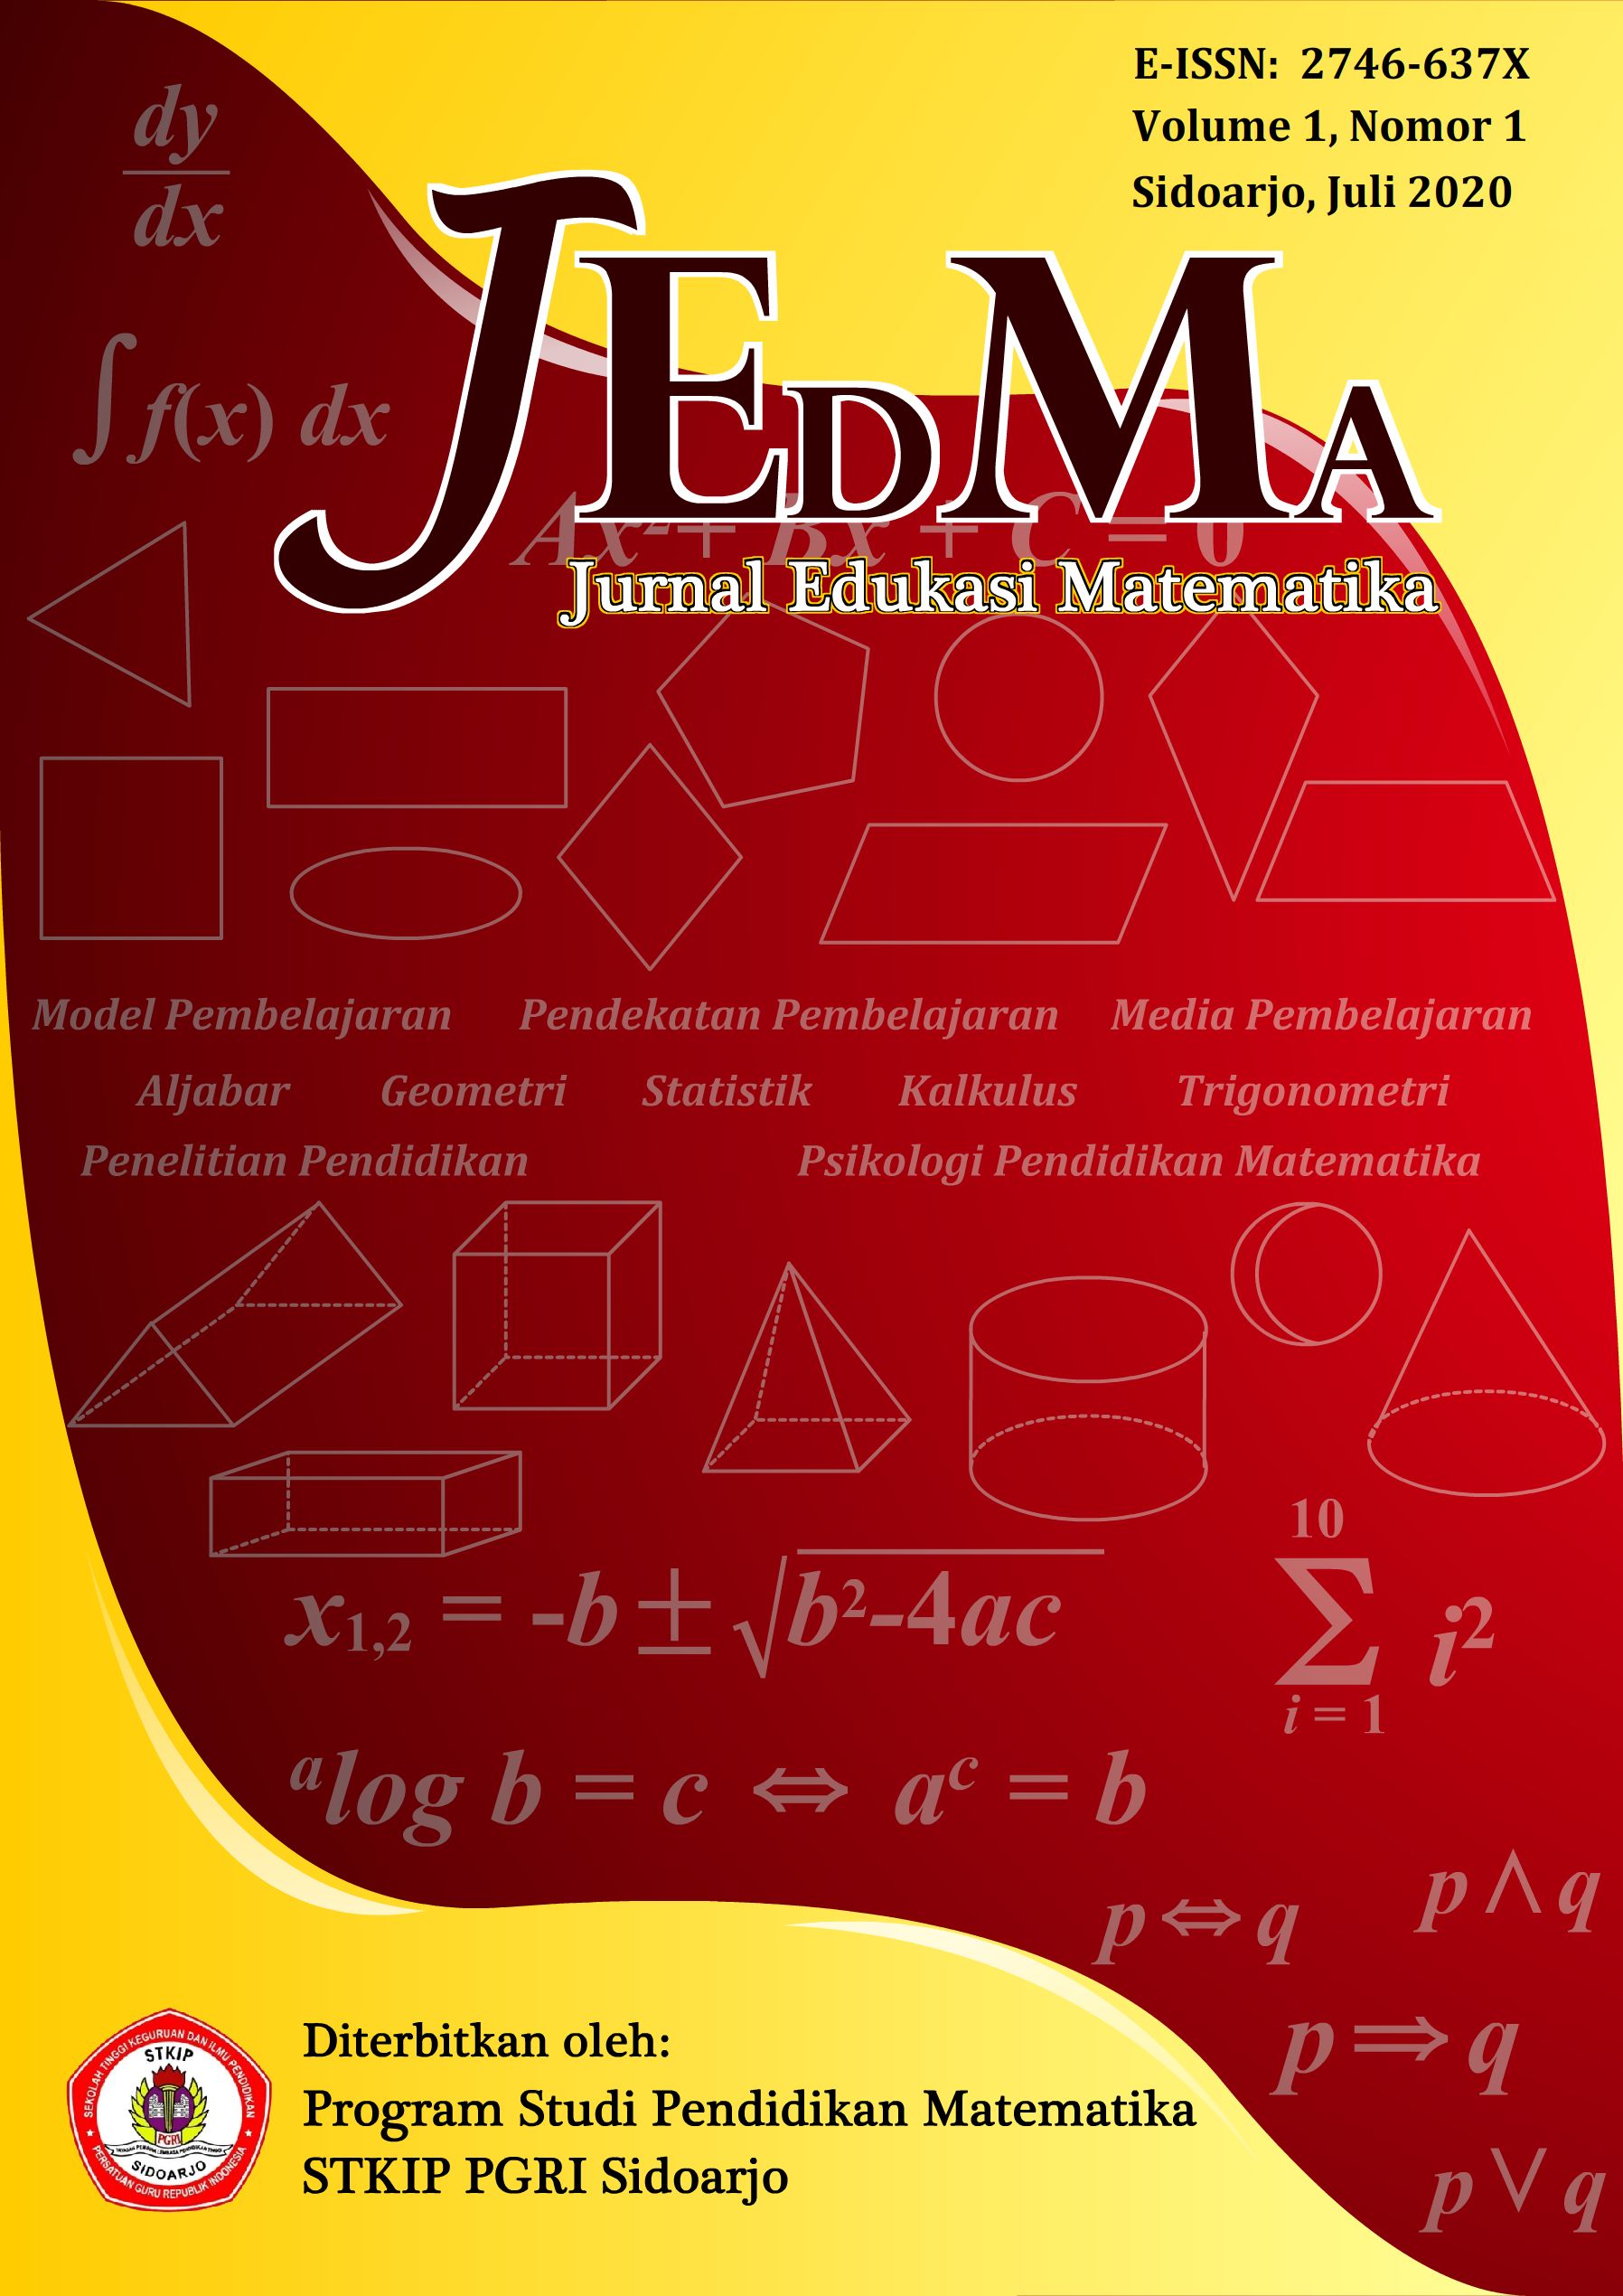 COVER_JEDMA_EDIT_NEW1.jpg